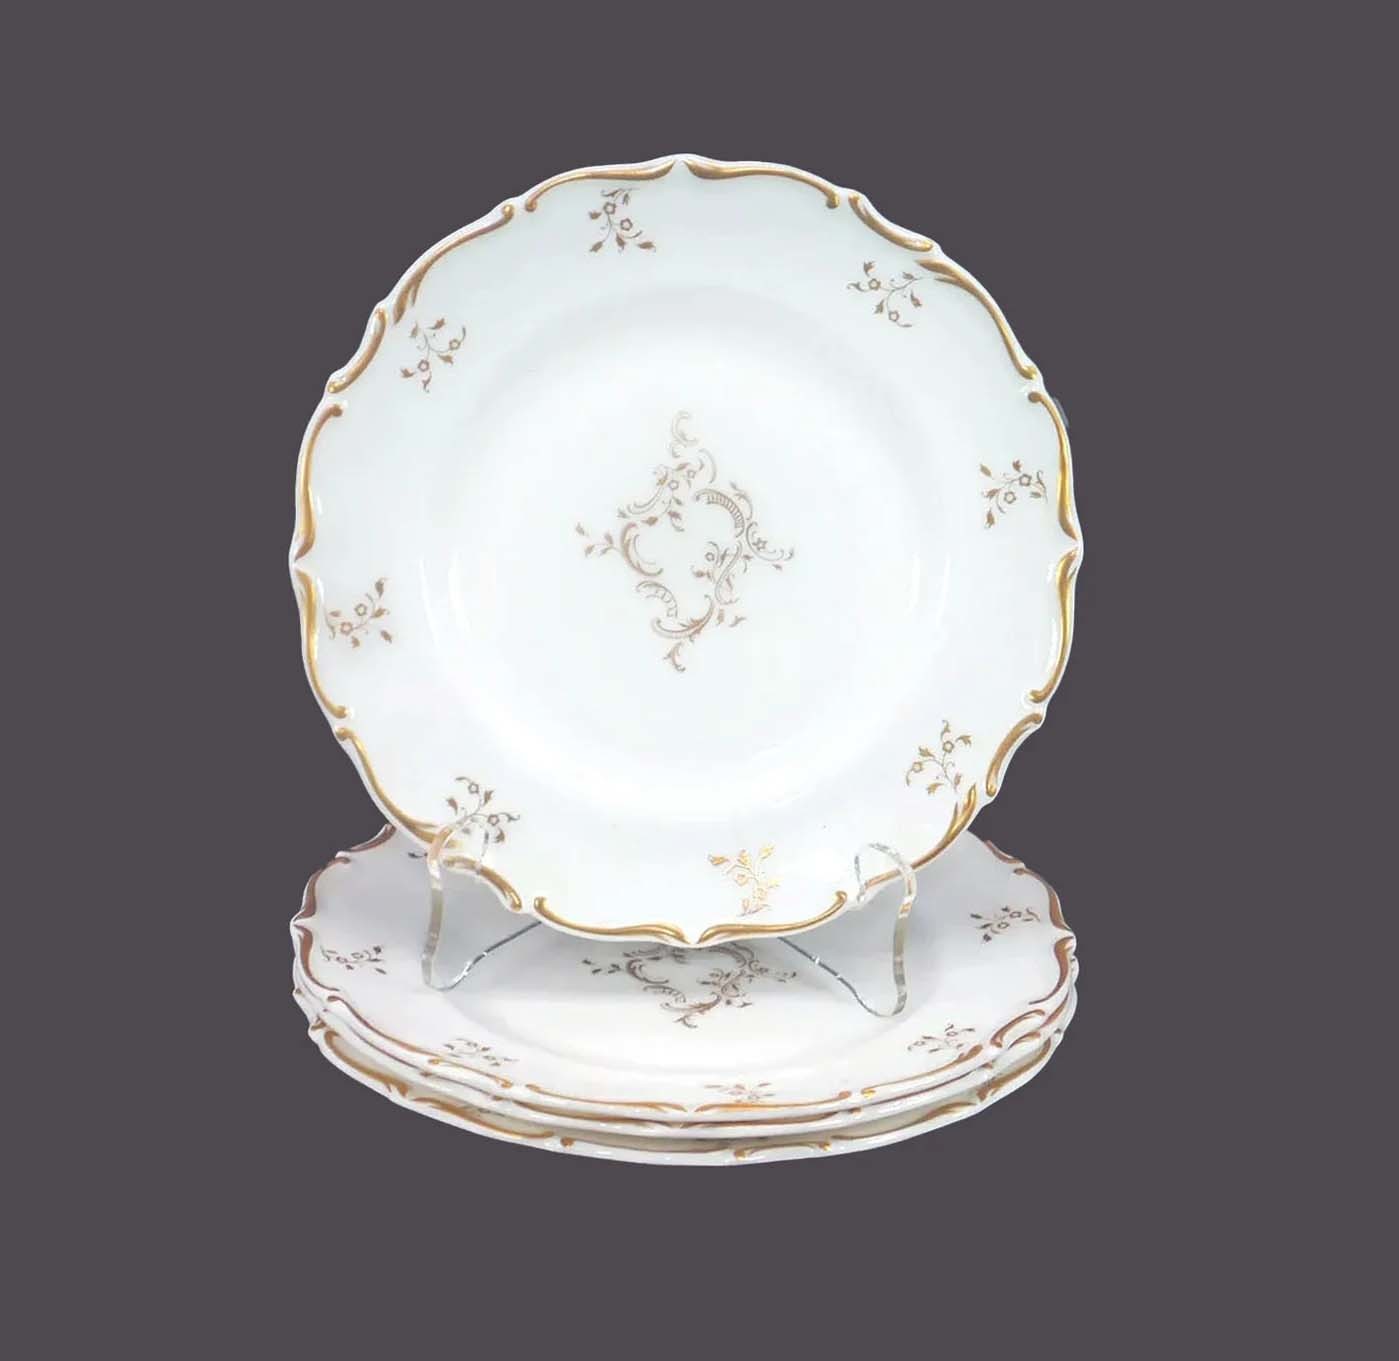 Royal Doulton H4954 Monteigne bone china bread plates made in England. - $52.55 - $65.15